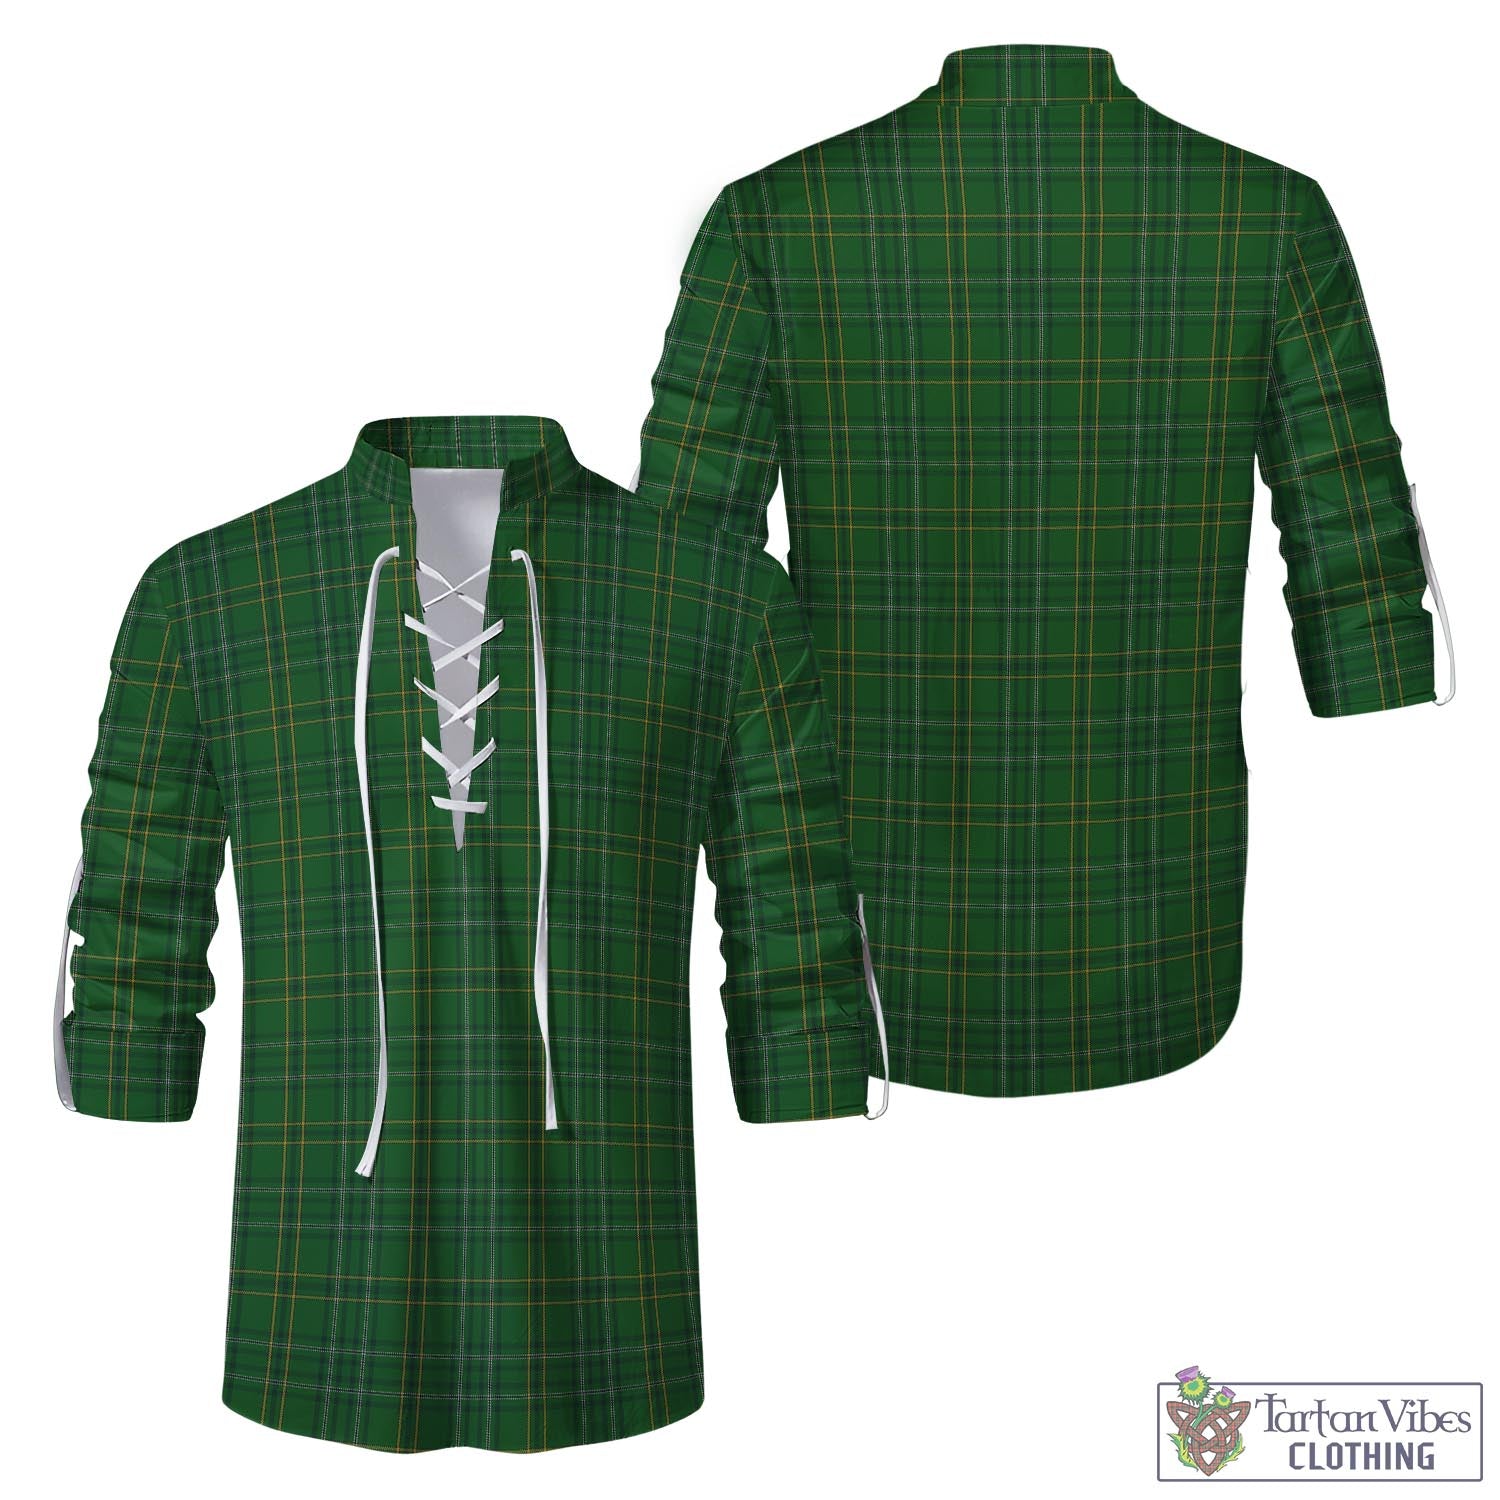 Tartan Vibes Clothing Wexford County Ireland Tartan Men's Scottish Traditional Jacobite Ghillie Kilt Shirt